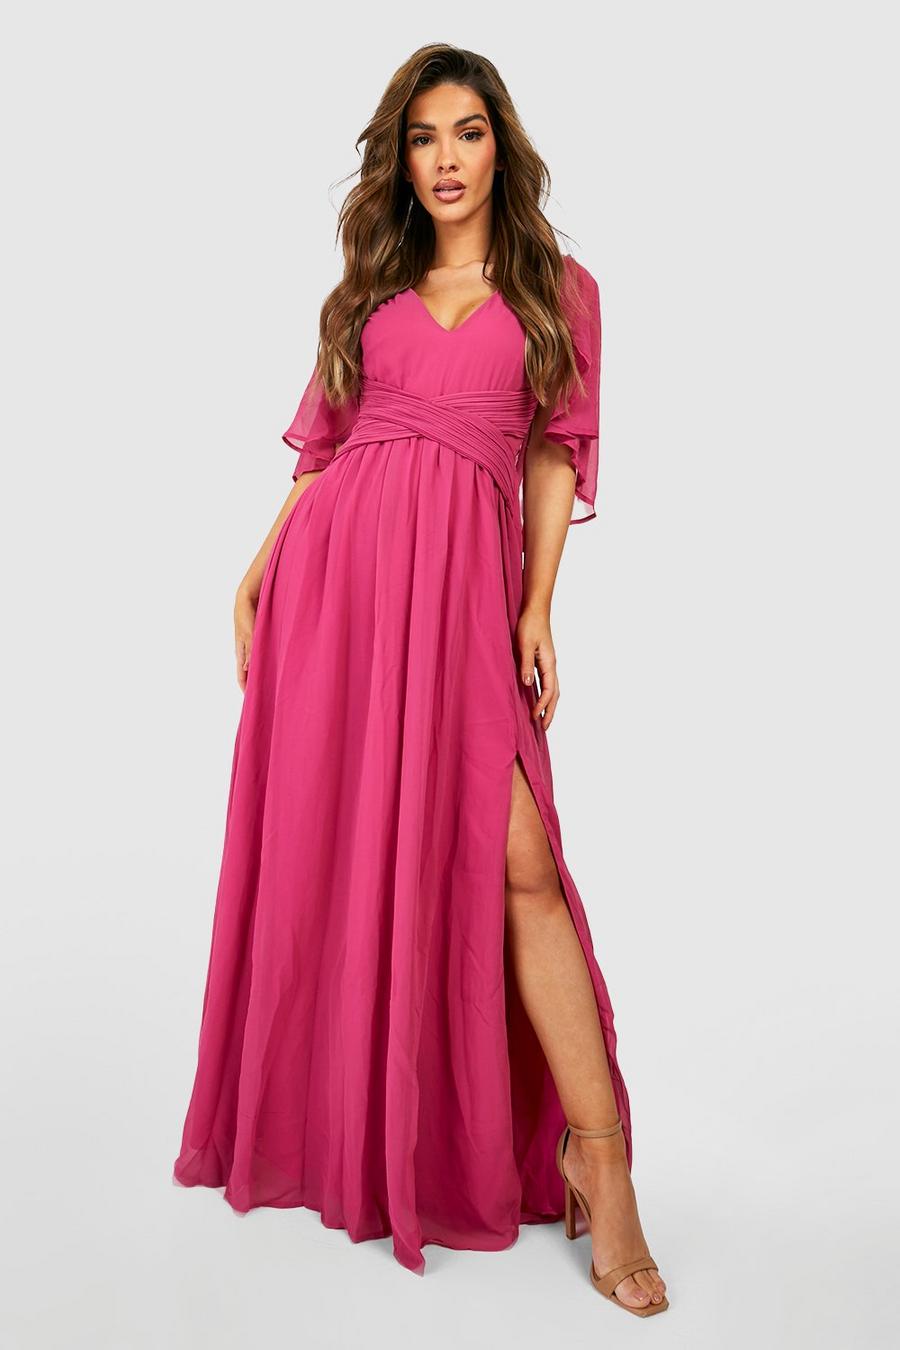 Magenta pink Bridesmaid Chiffon Cape Maxi Dress